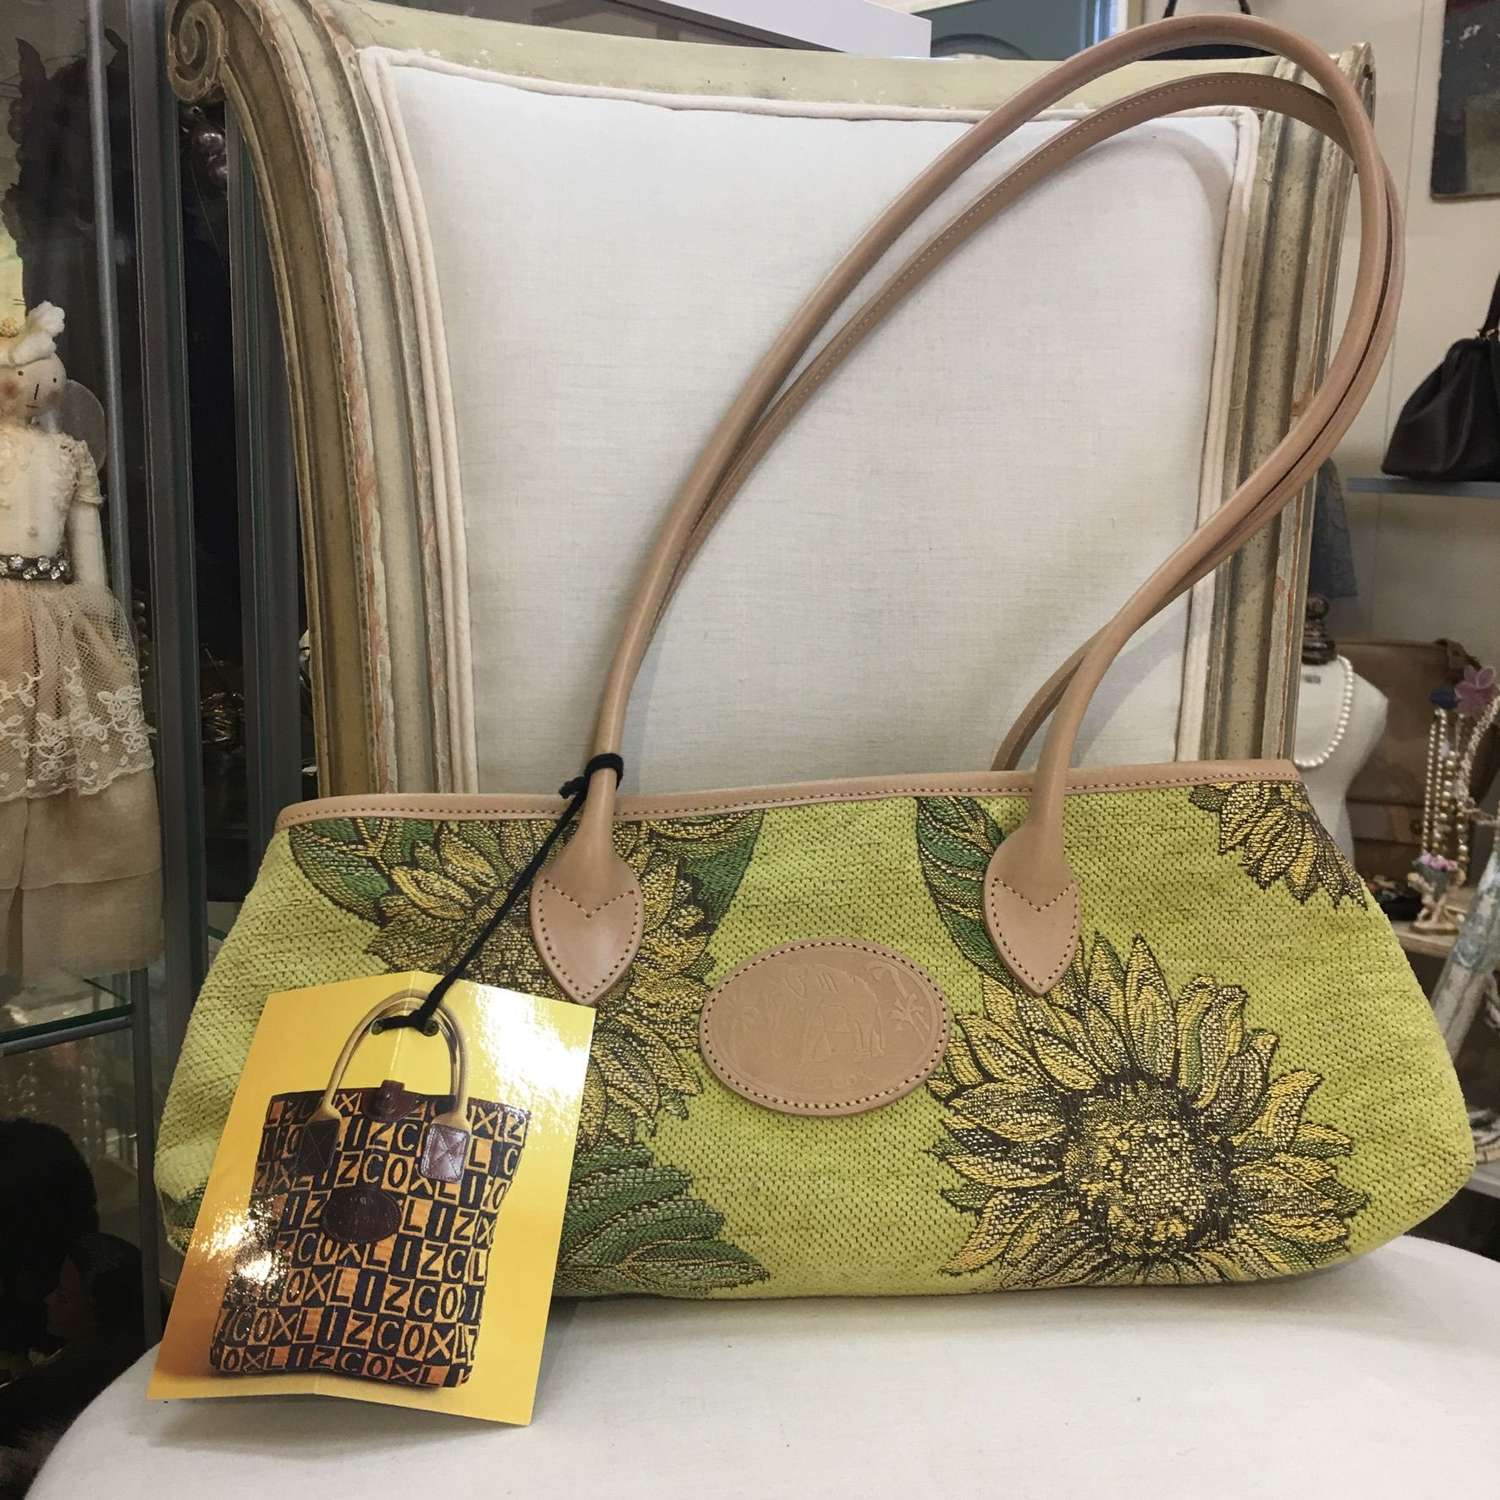 Liz Cox sunflower shoulder bag with leather trims